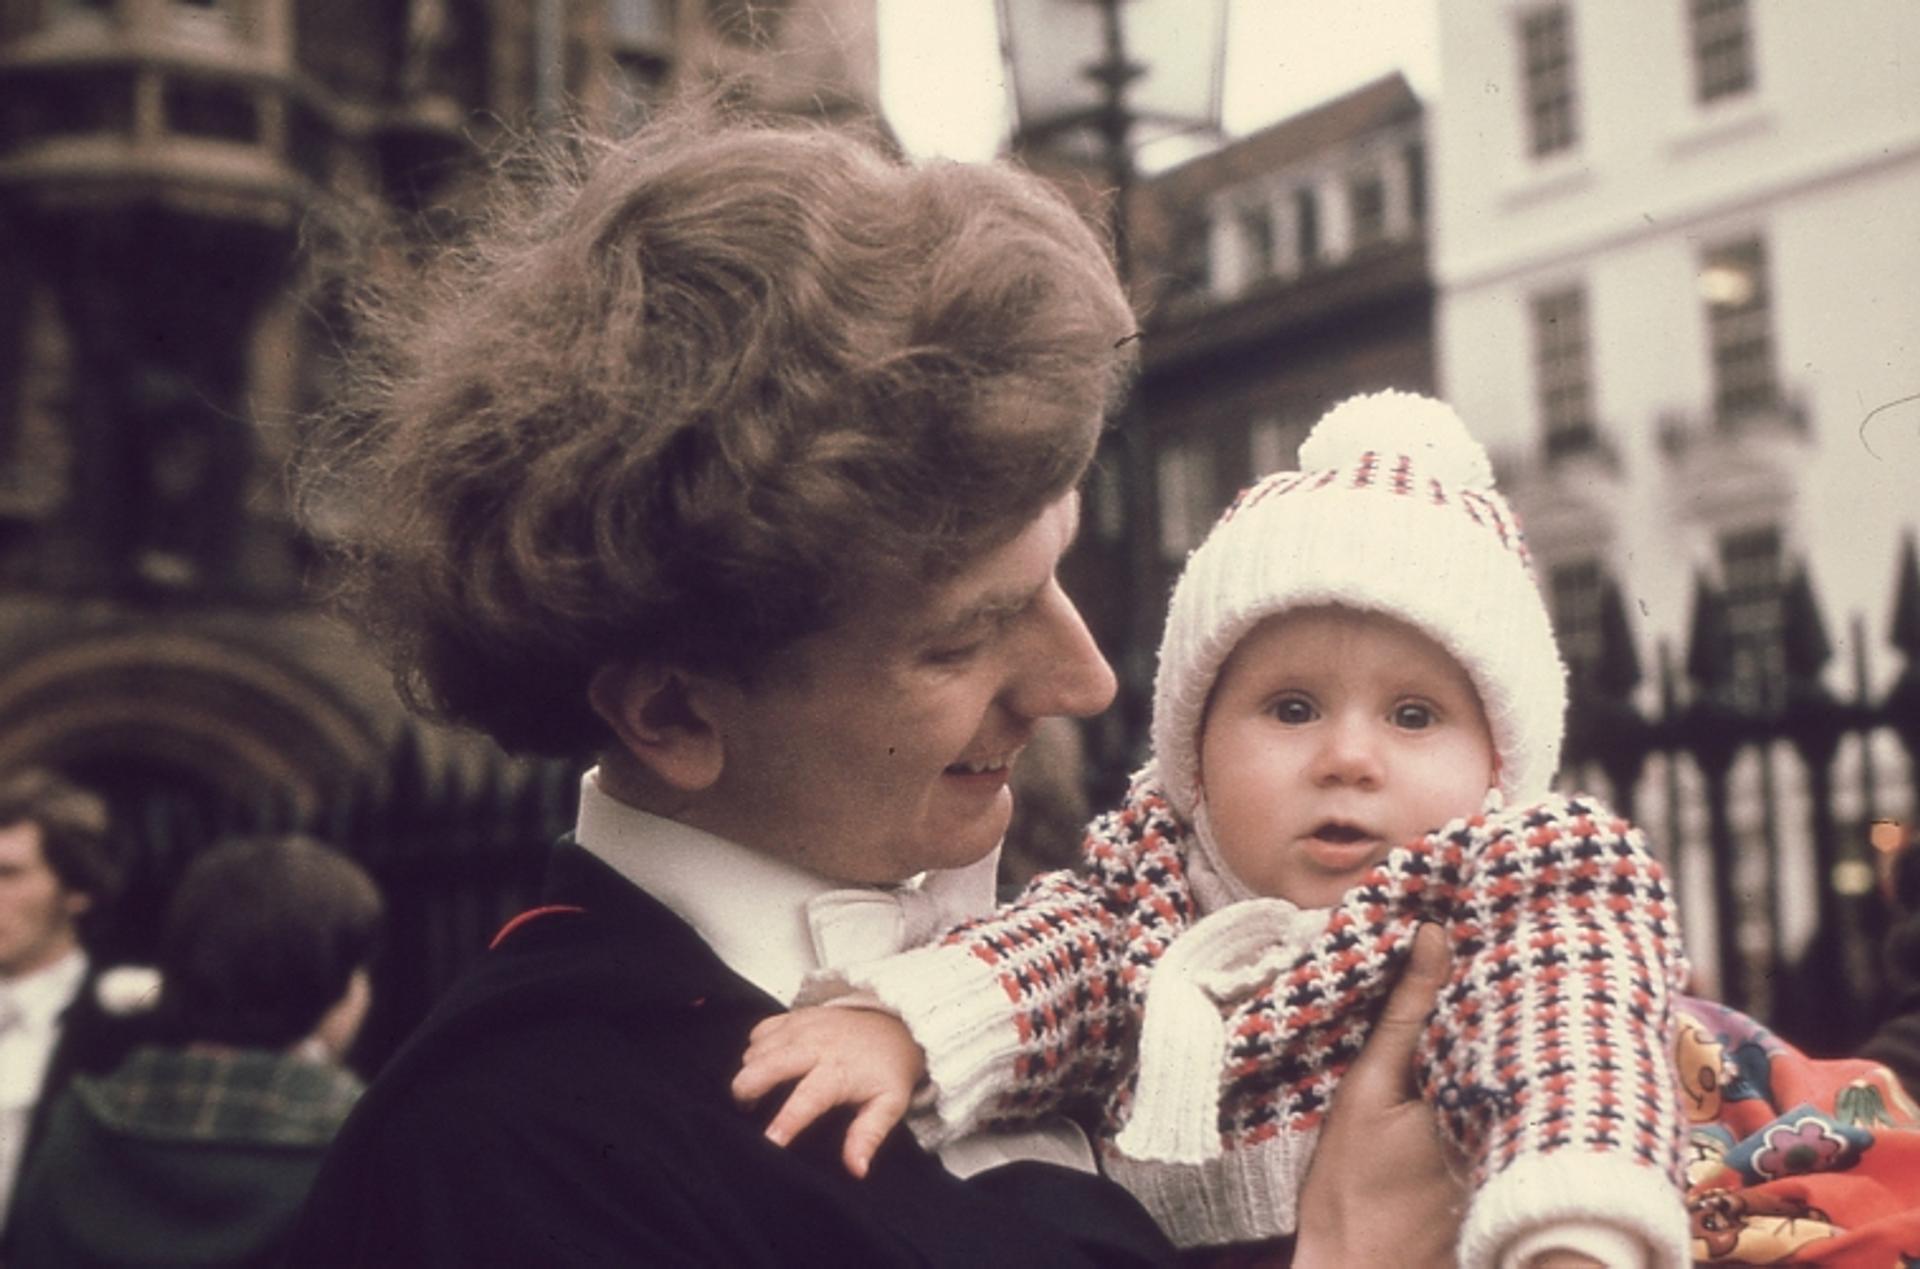 With my daughter Karen, at my graduation in Cambridge in 1978